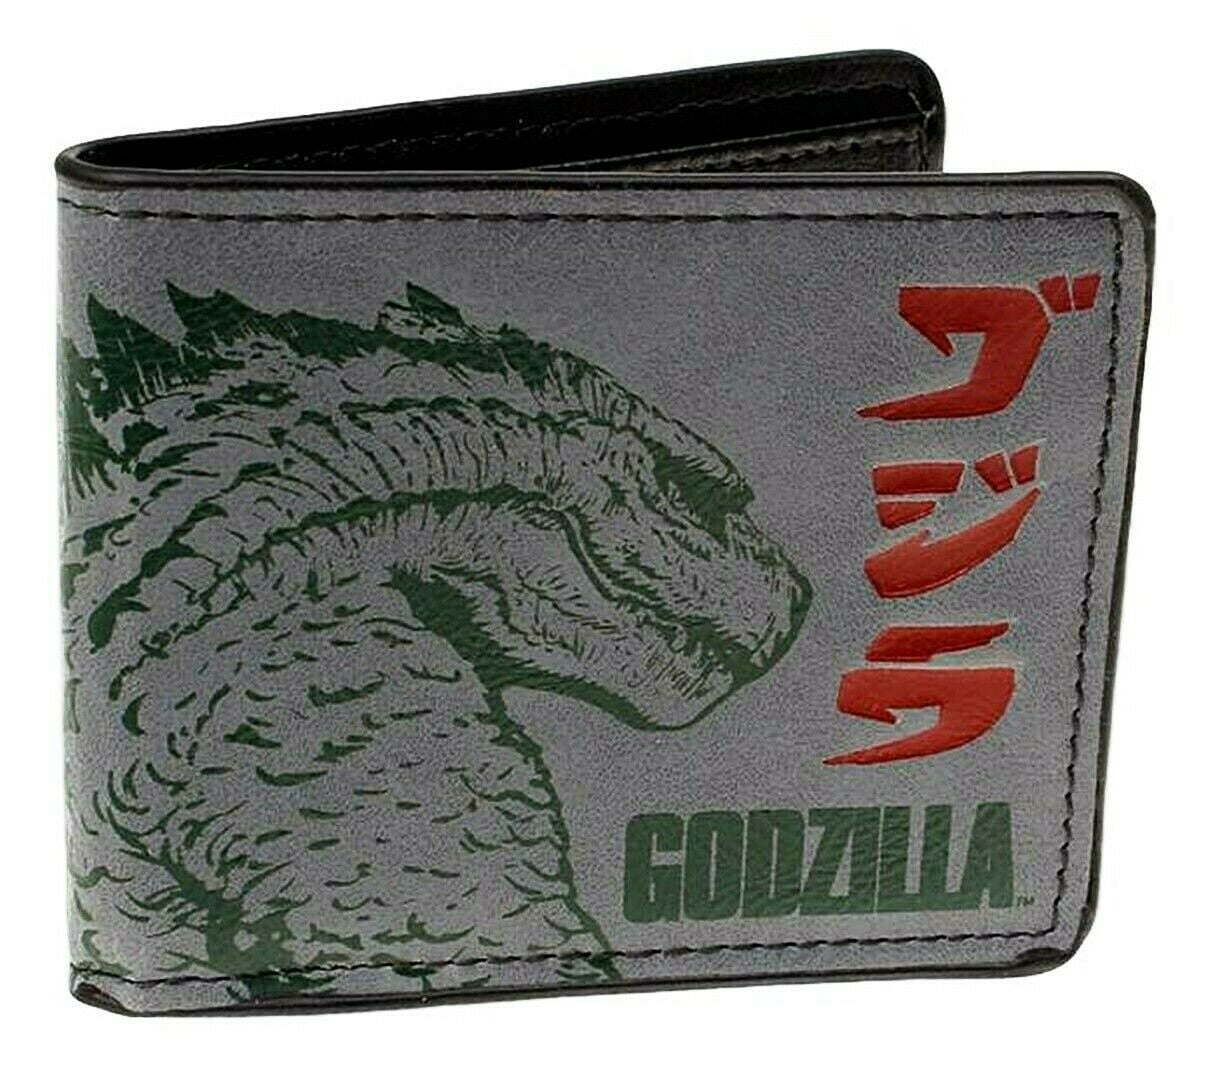 cool wallet for dad Customized leather handmade wallet husband Godzilla king of the monster men's wallet Tassen & portemonnees Bagage & Reizen Reisportefeuilles monster leather gift for him 